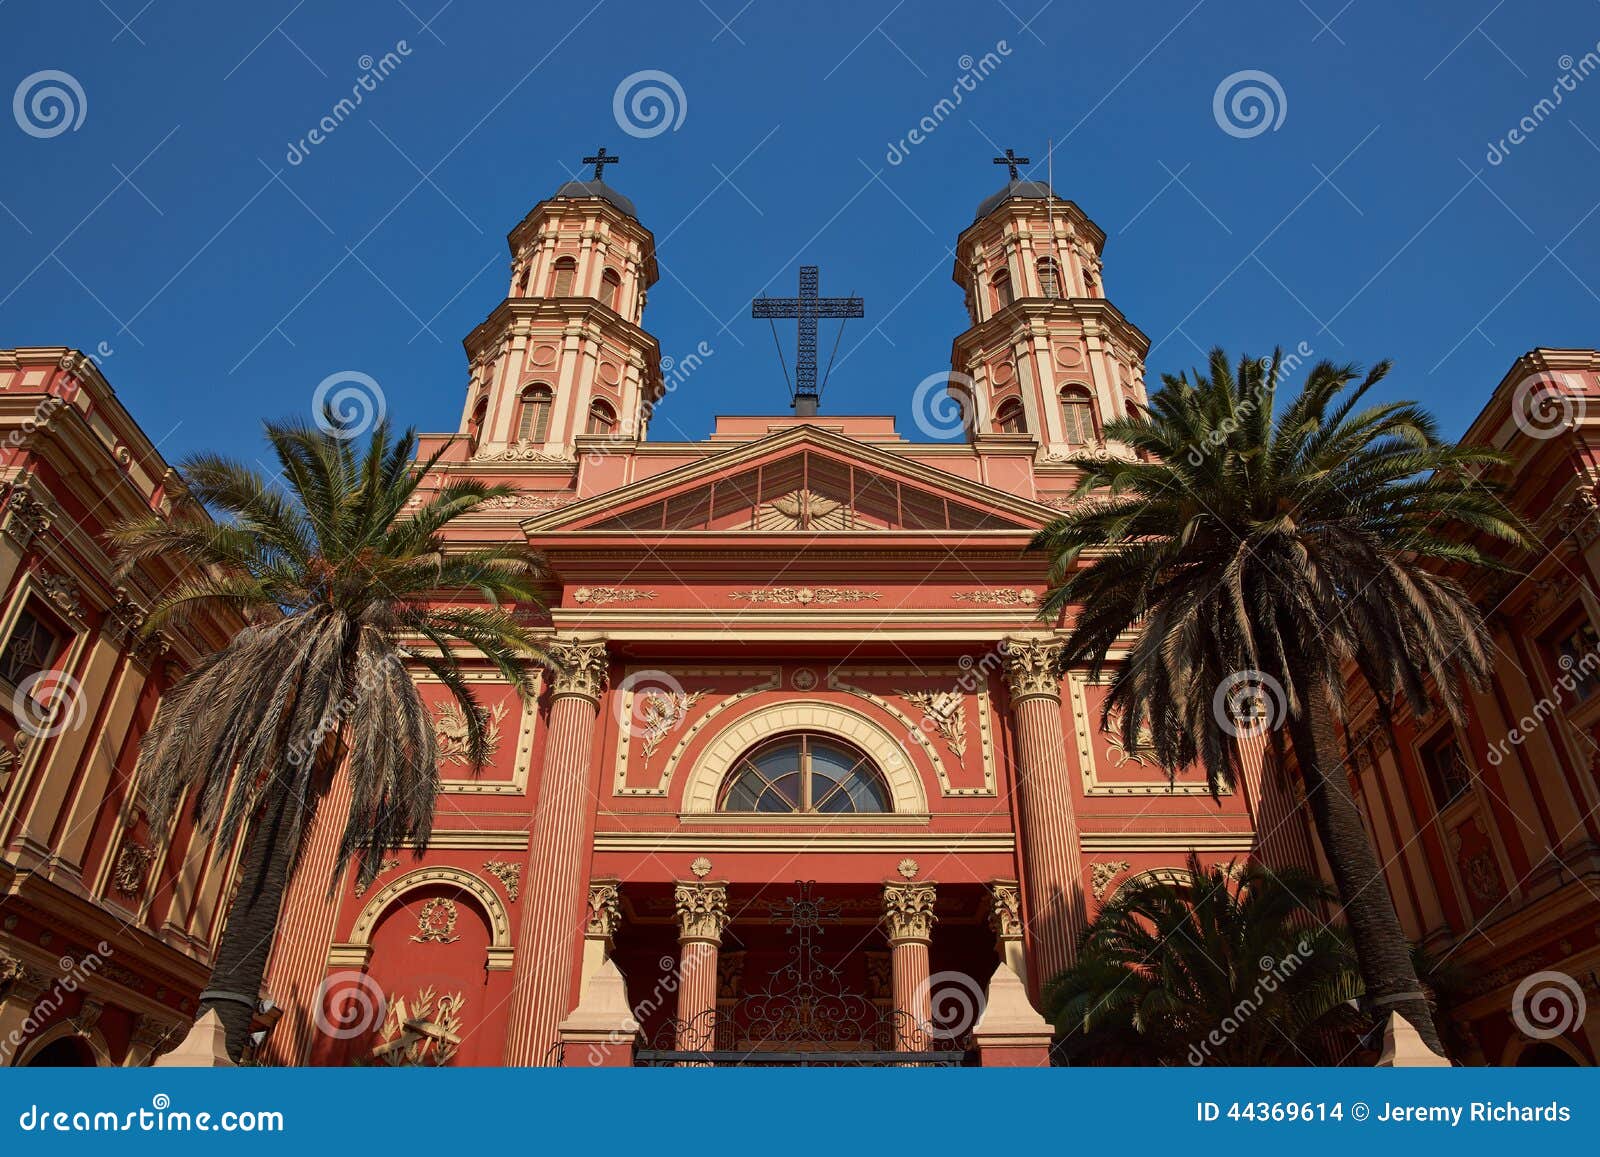 imposing church in santiago, chile